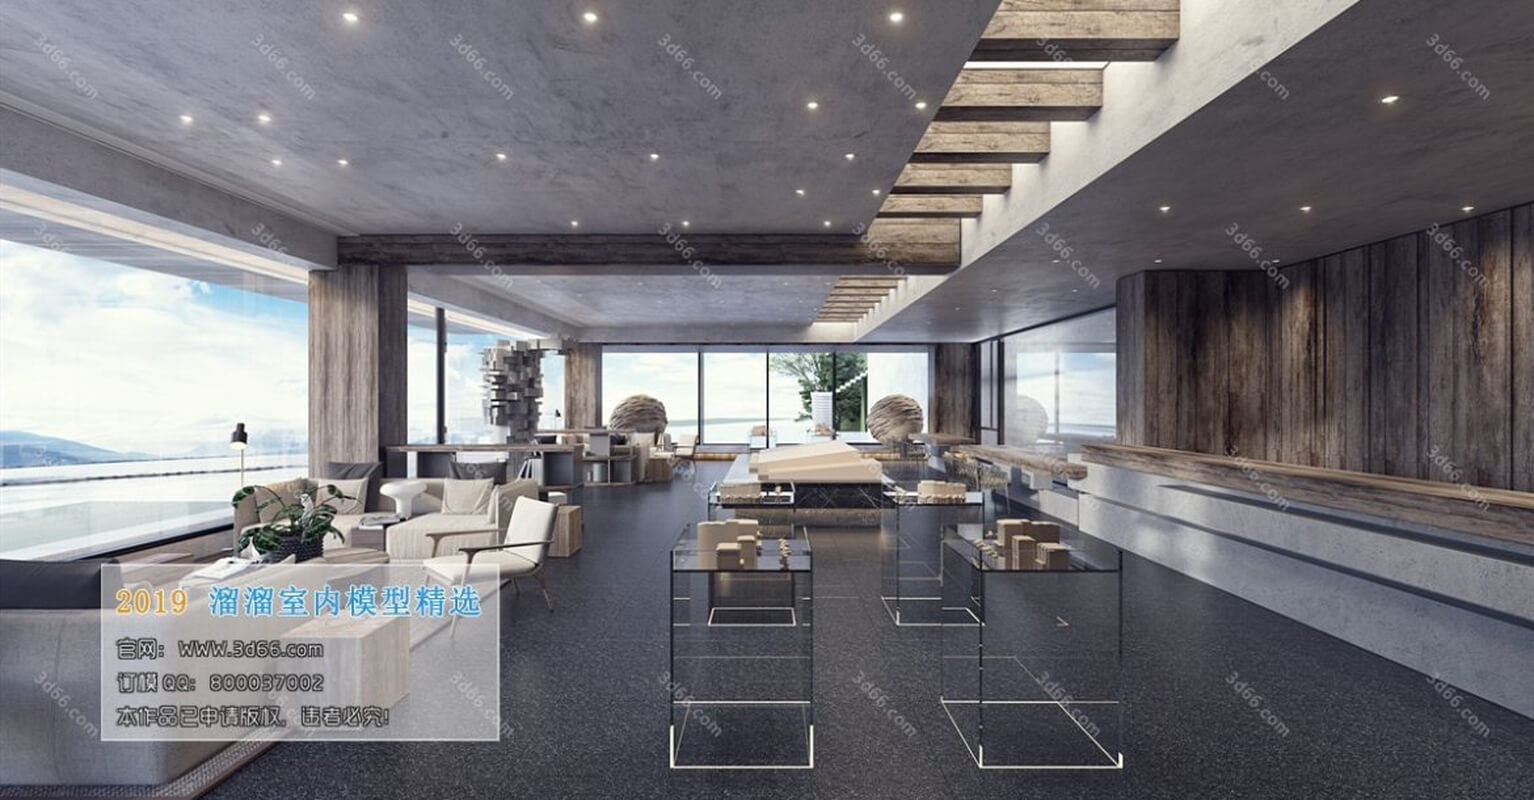 3D66 Club House Interior 2019 Style (01)